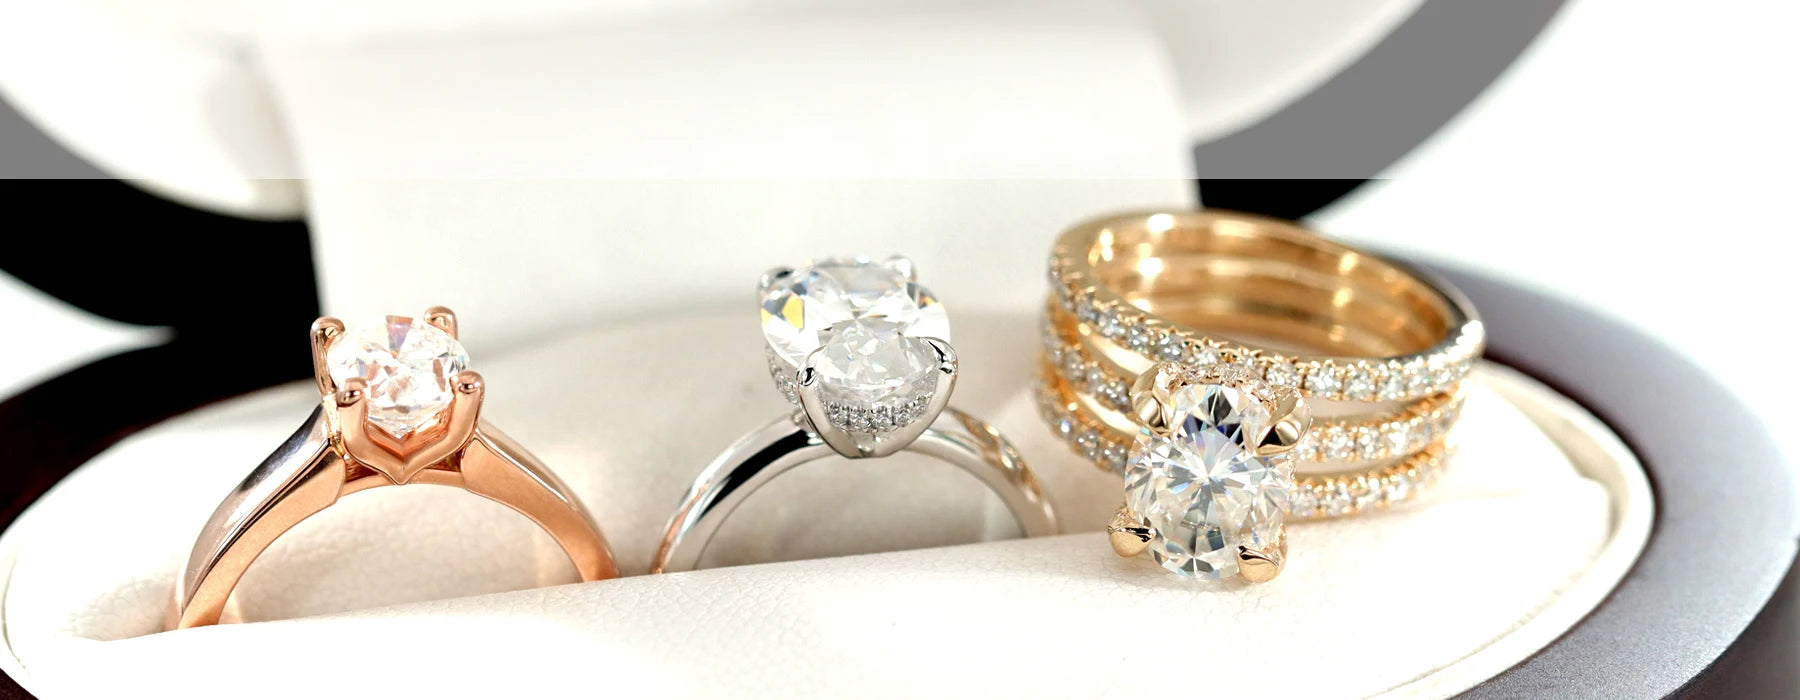 diamond engagement rings with guaranteed quality workmanship Quorri